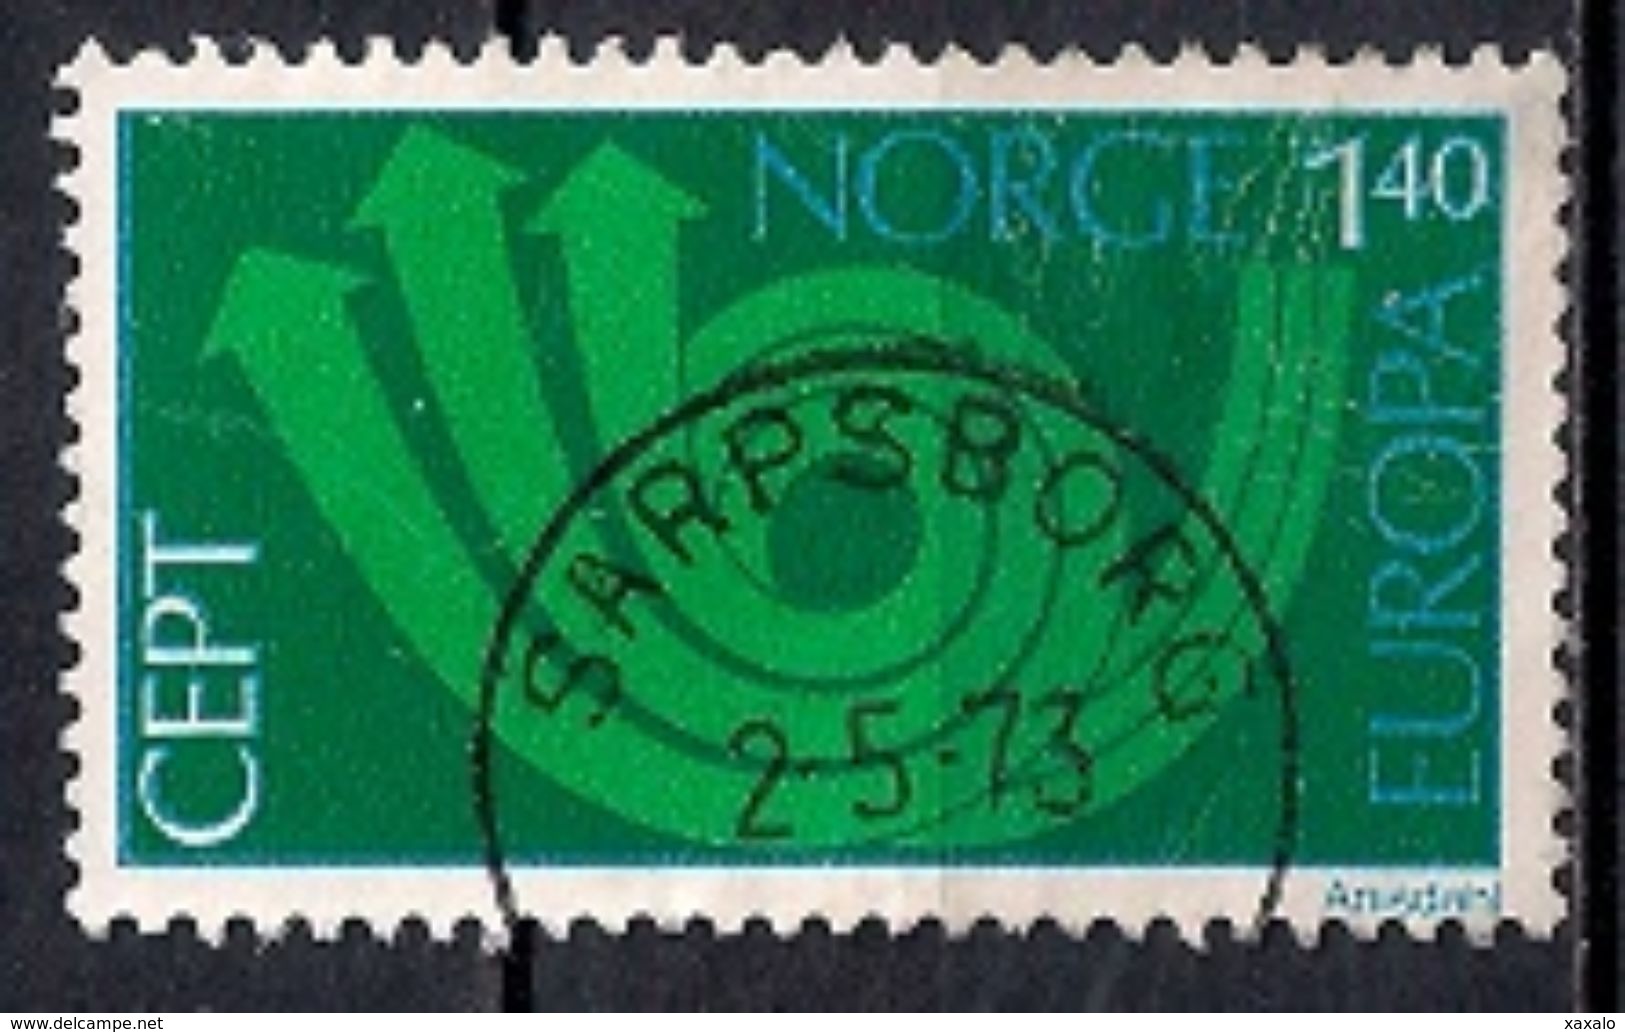 Norway 1973 - EUROPA STAMPS - Usados